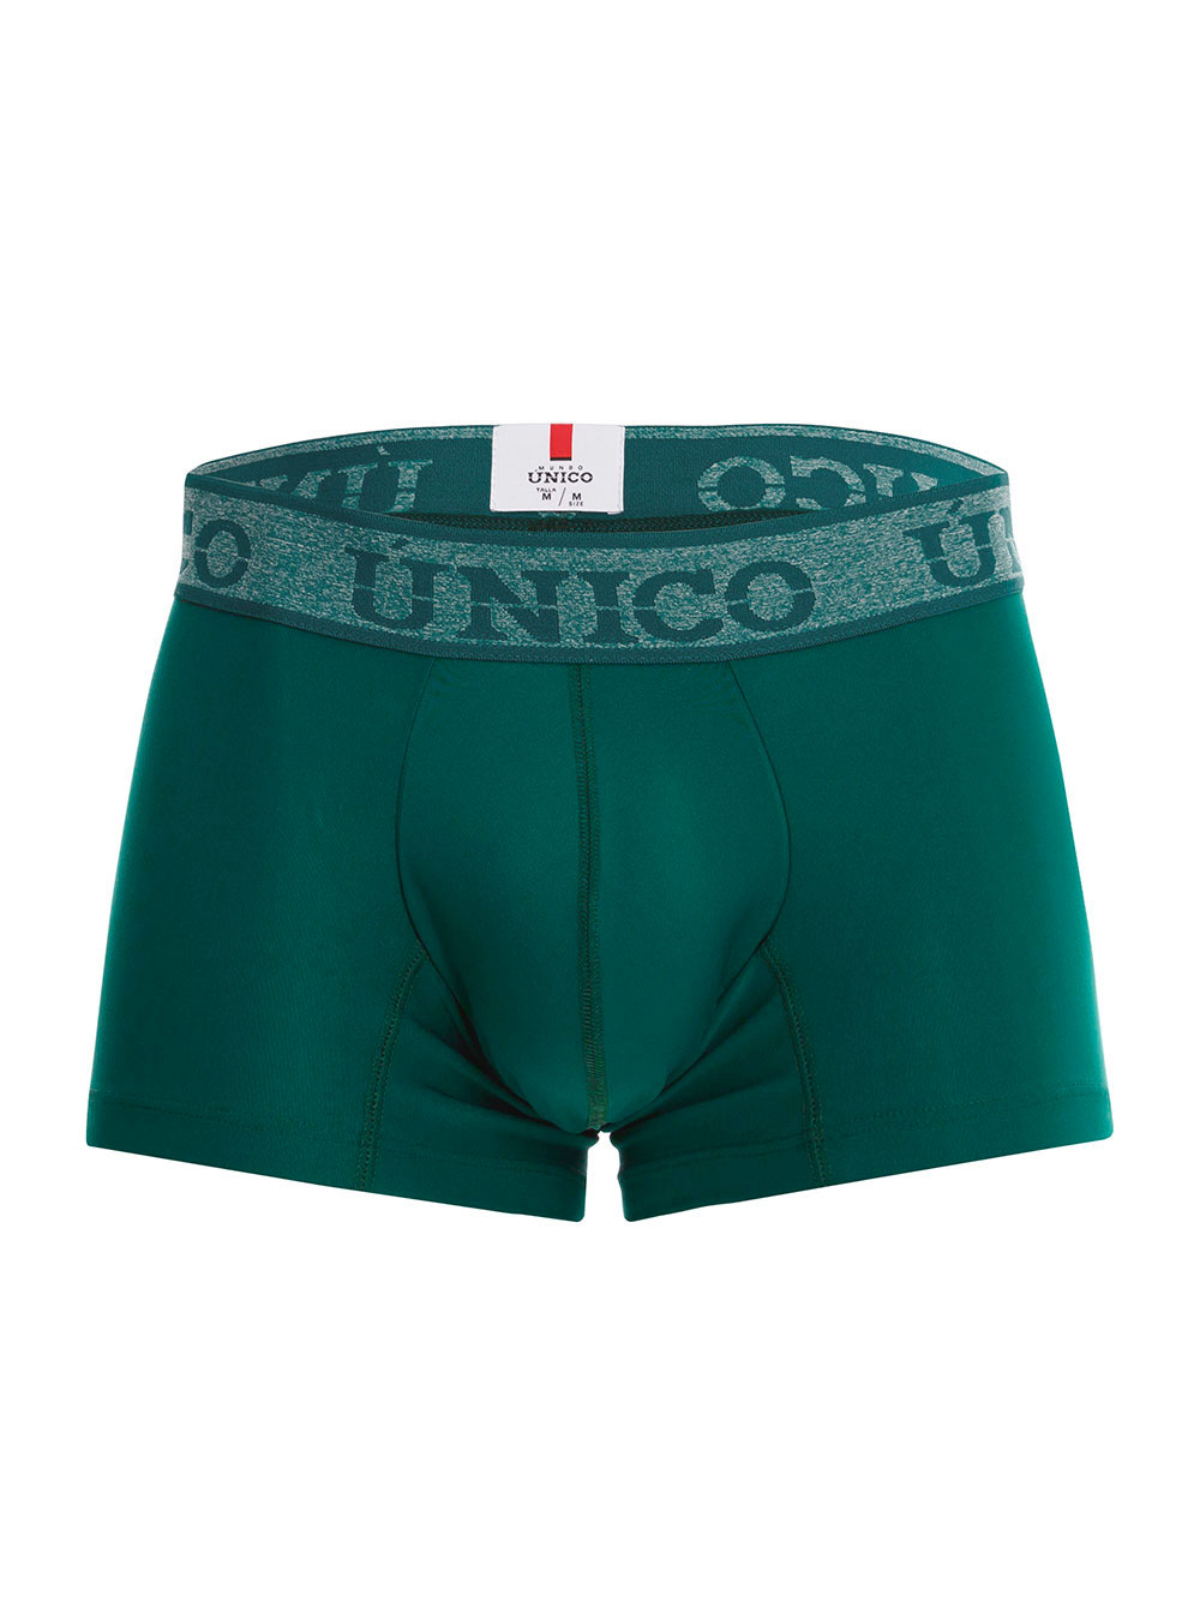 Mundo Unico Boxer Cup Short Emerald